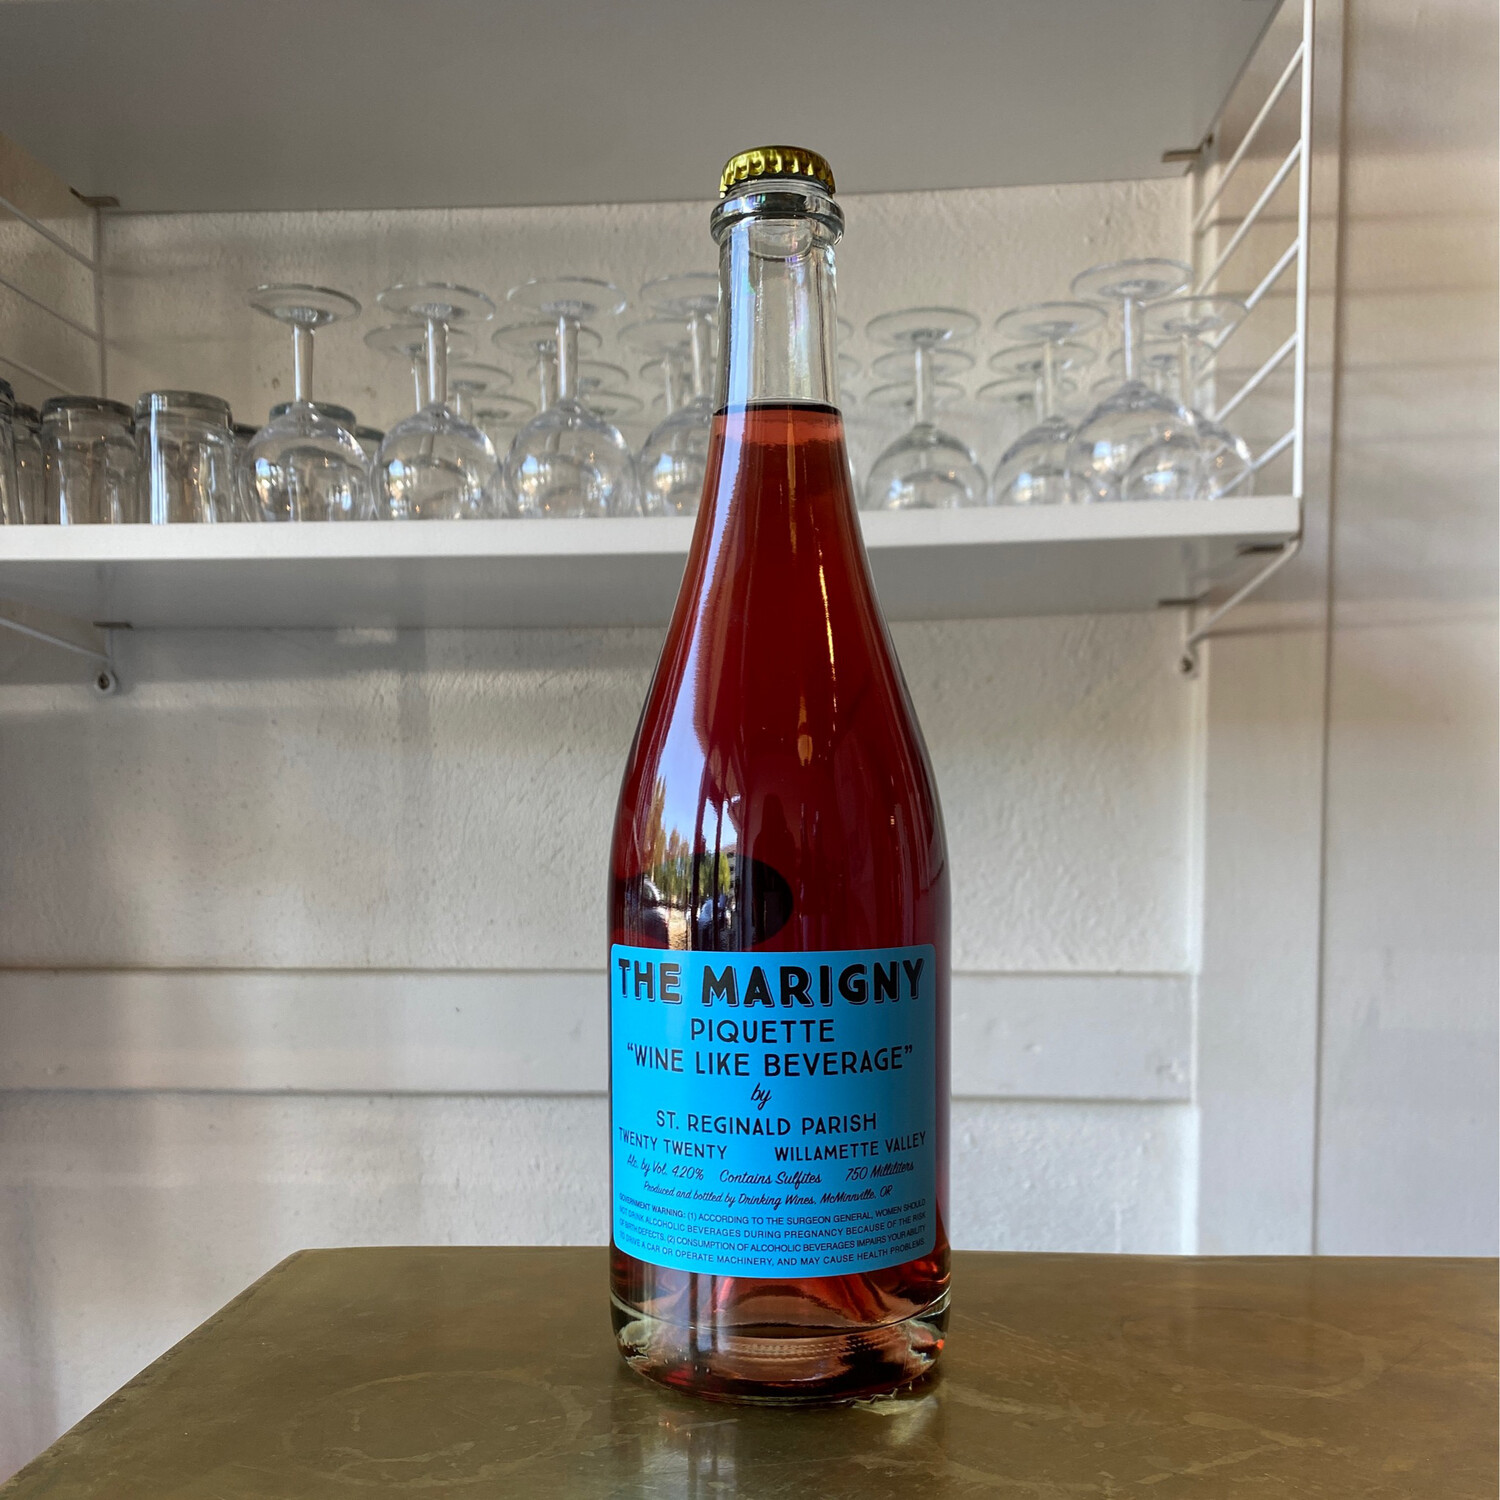 The Marigny, Piquette "Wine Like Beverage" (2021)